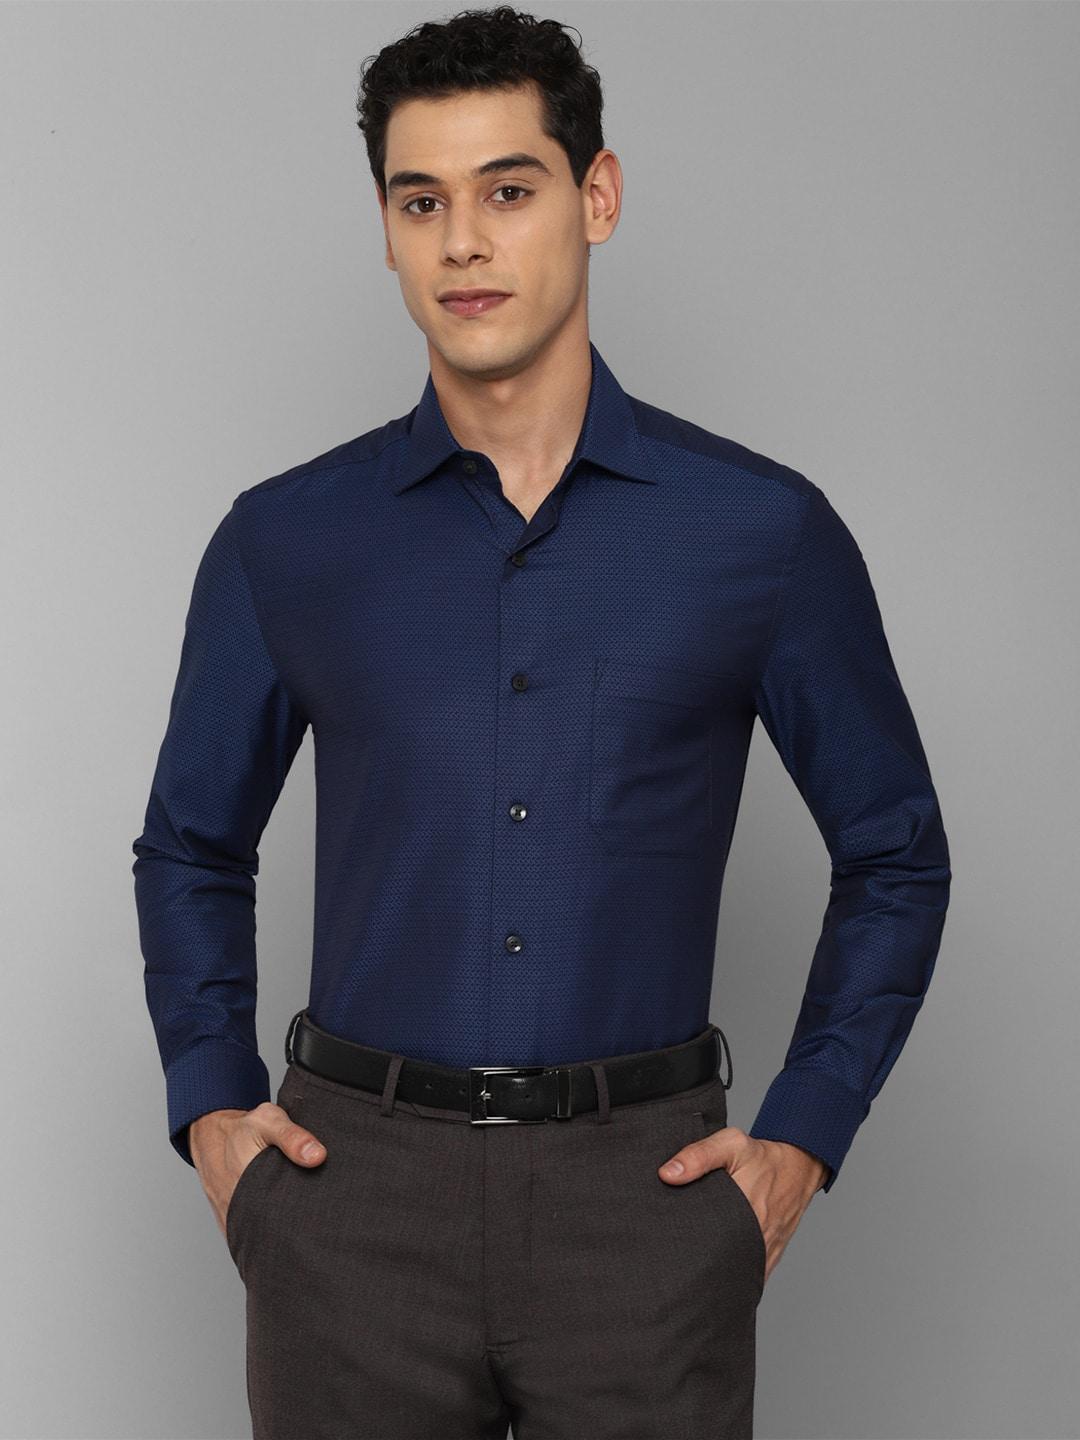 louis-philippe-men-navy-blue-formal-shirt